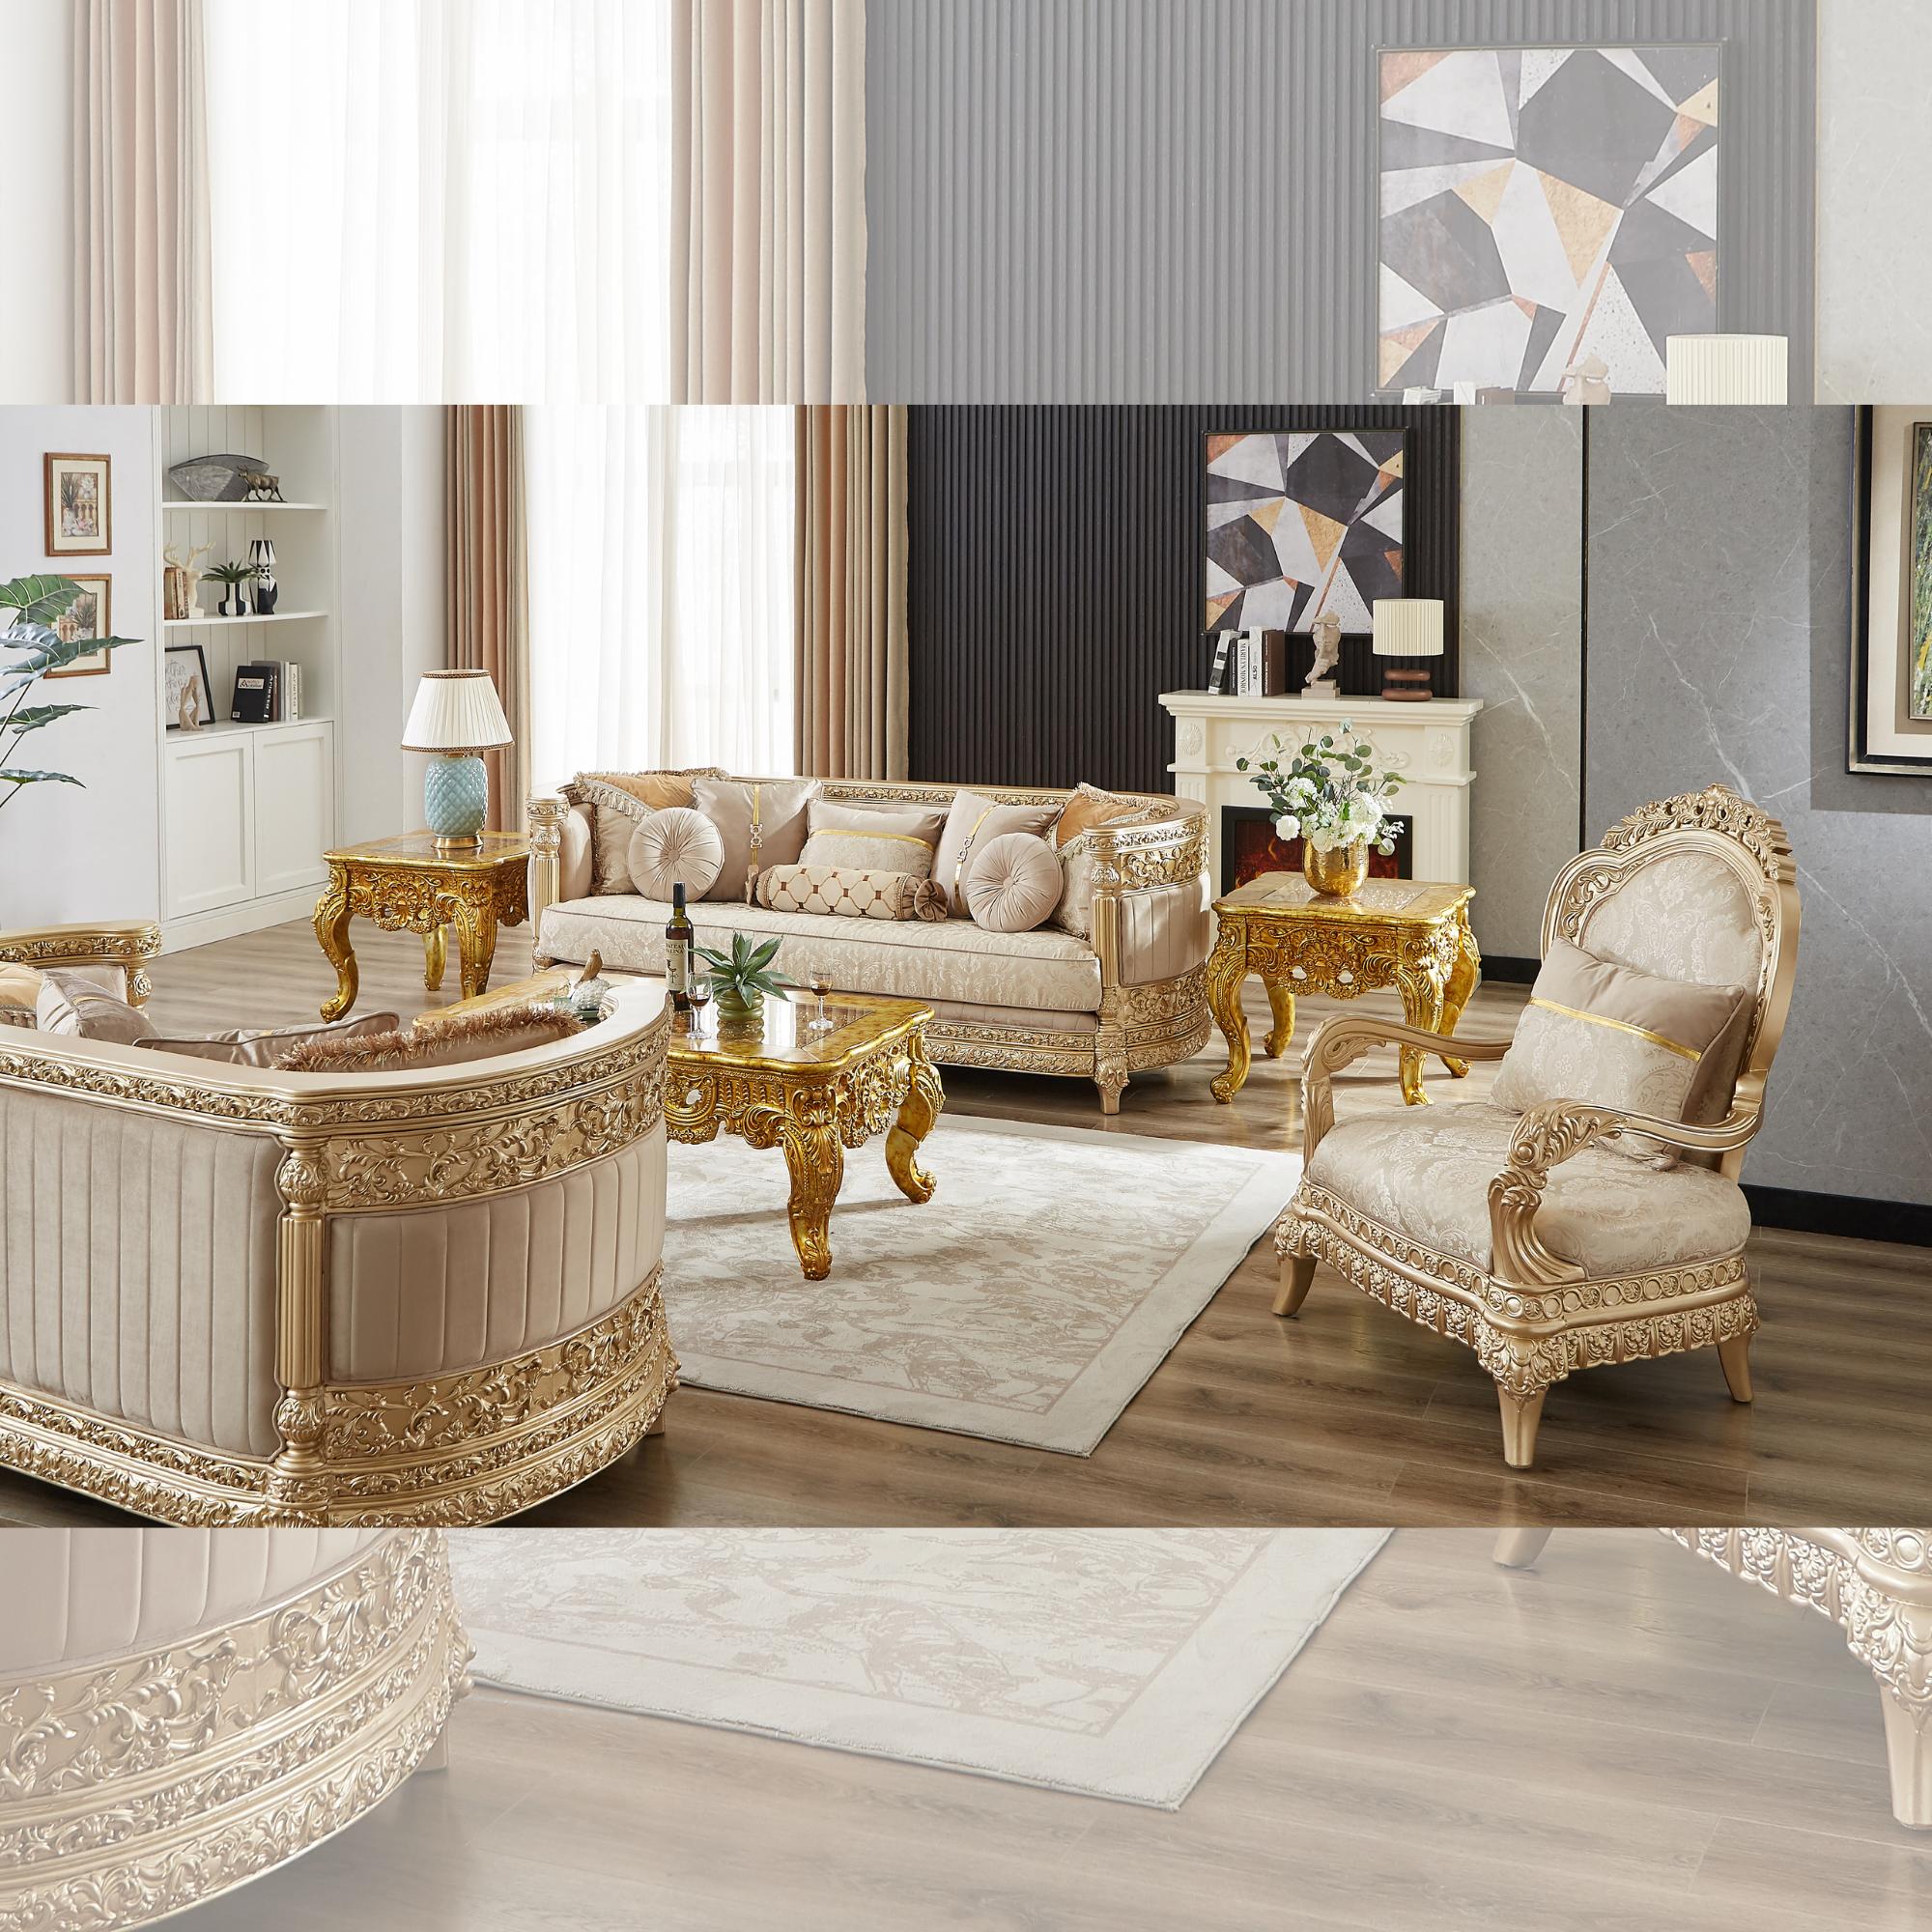 Classic, Traditional Living Room Set HD-9023 Living Room Set 3PCS HD-3PC9023 HD-3PC9023 in Gold, Beige Fabric